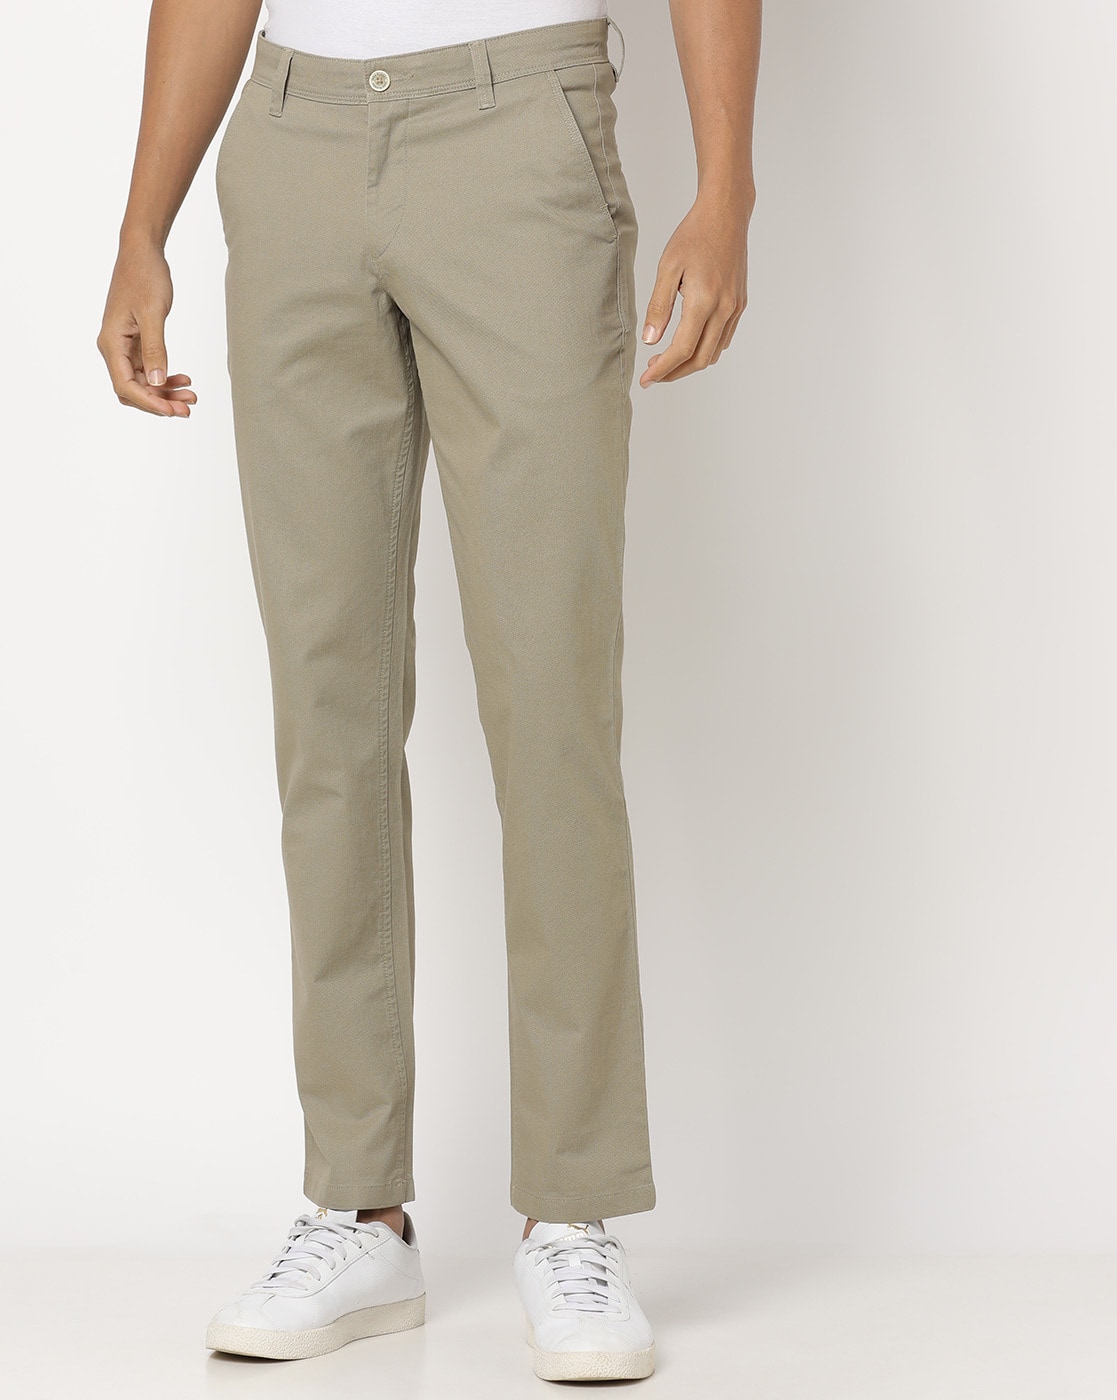 Slim Fit Pants - Gray/plaid - Men | H&M US